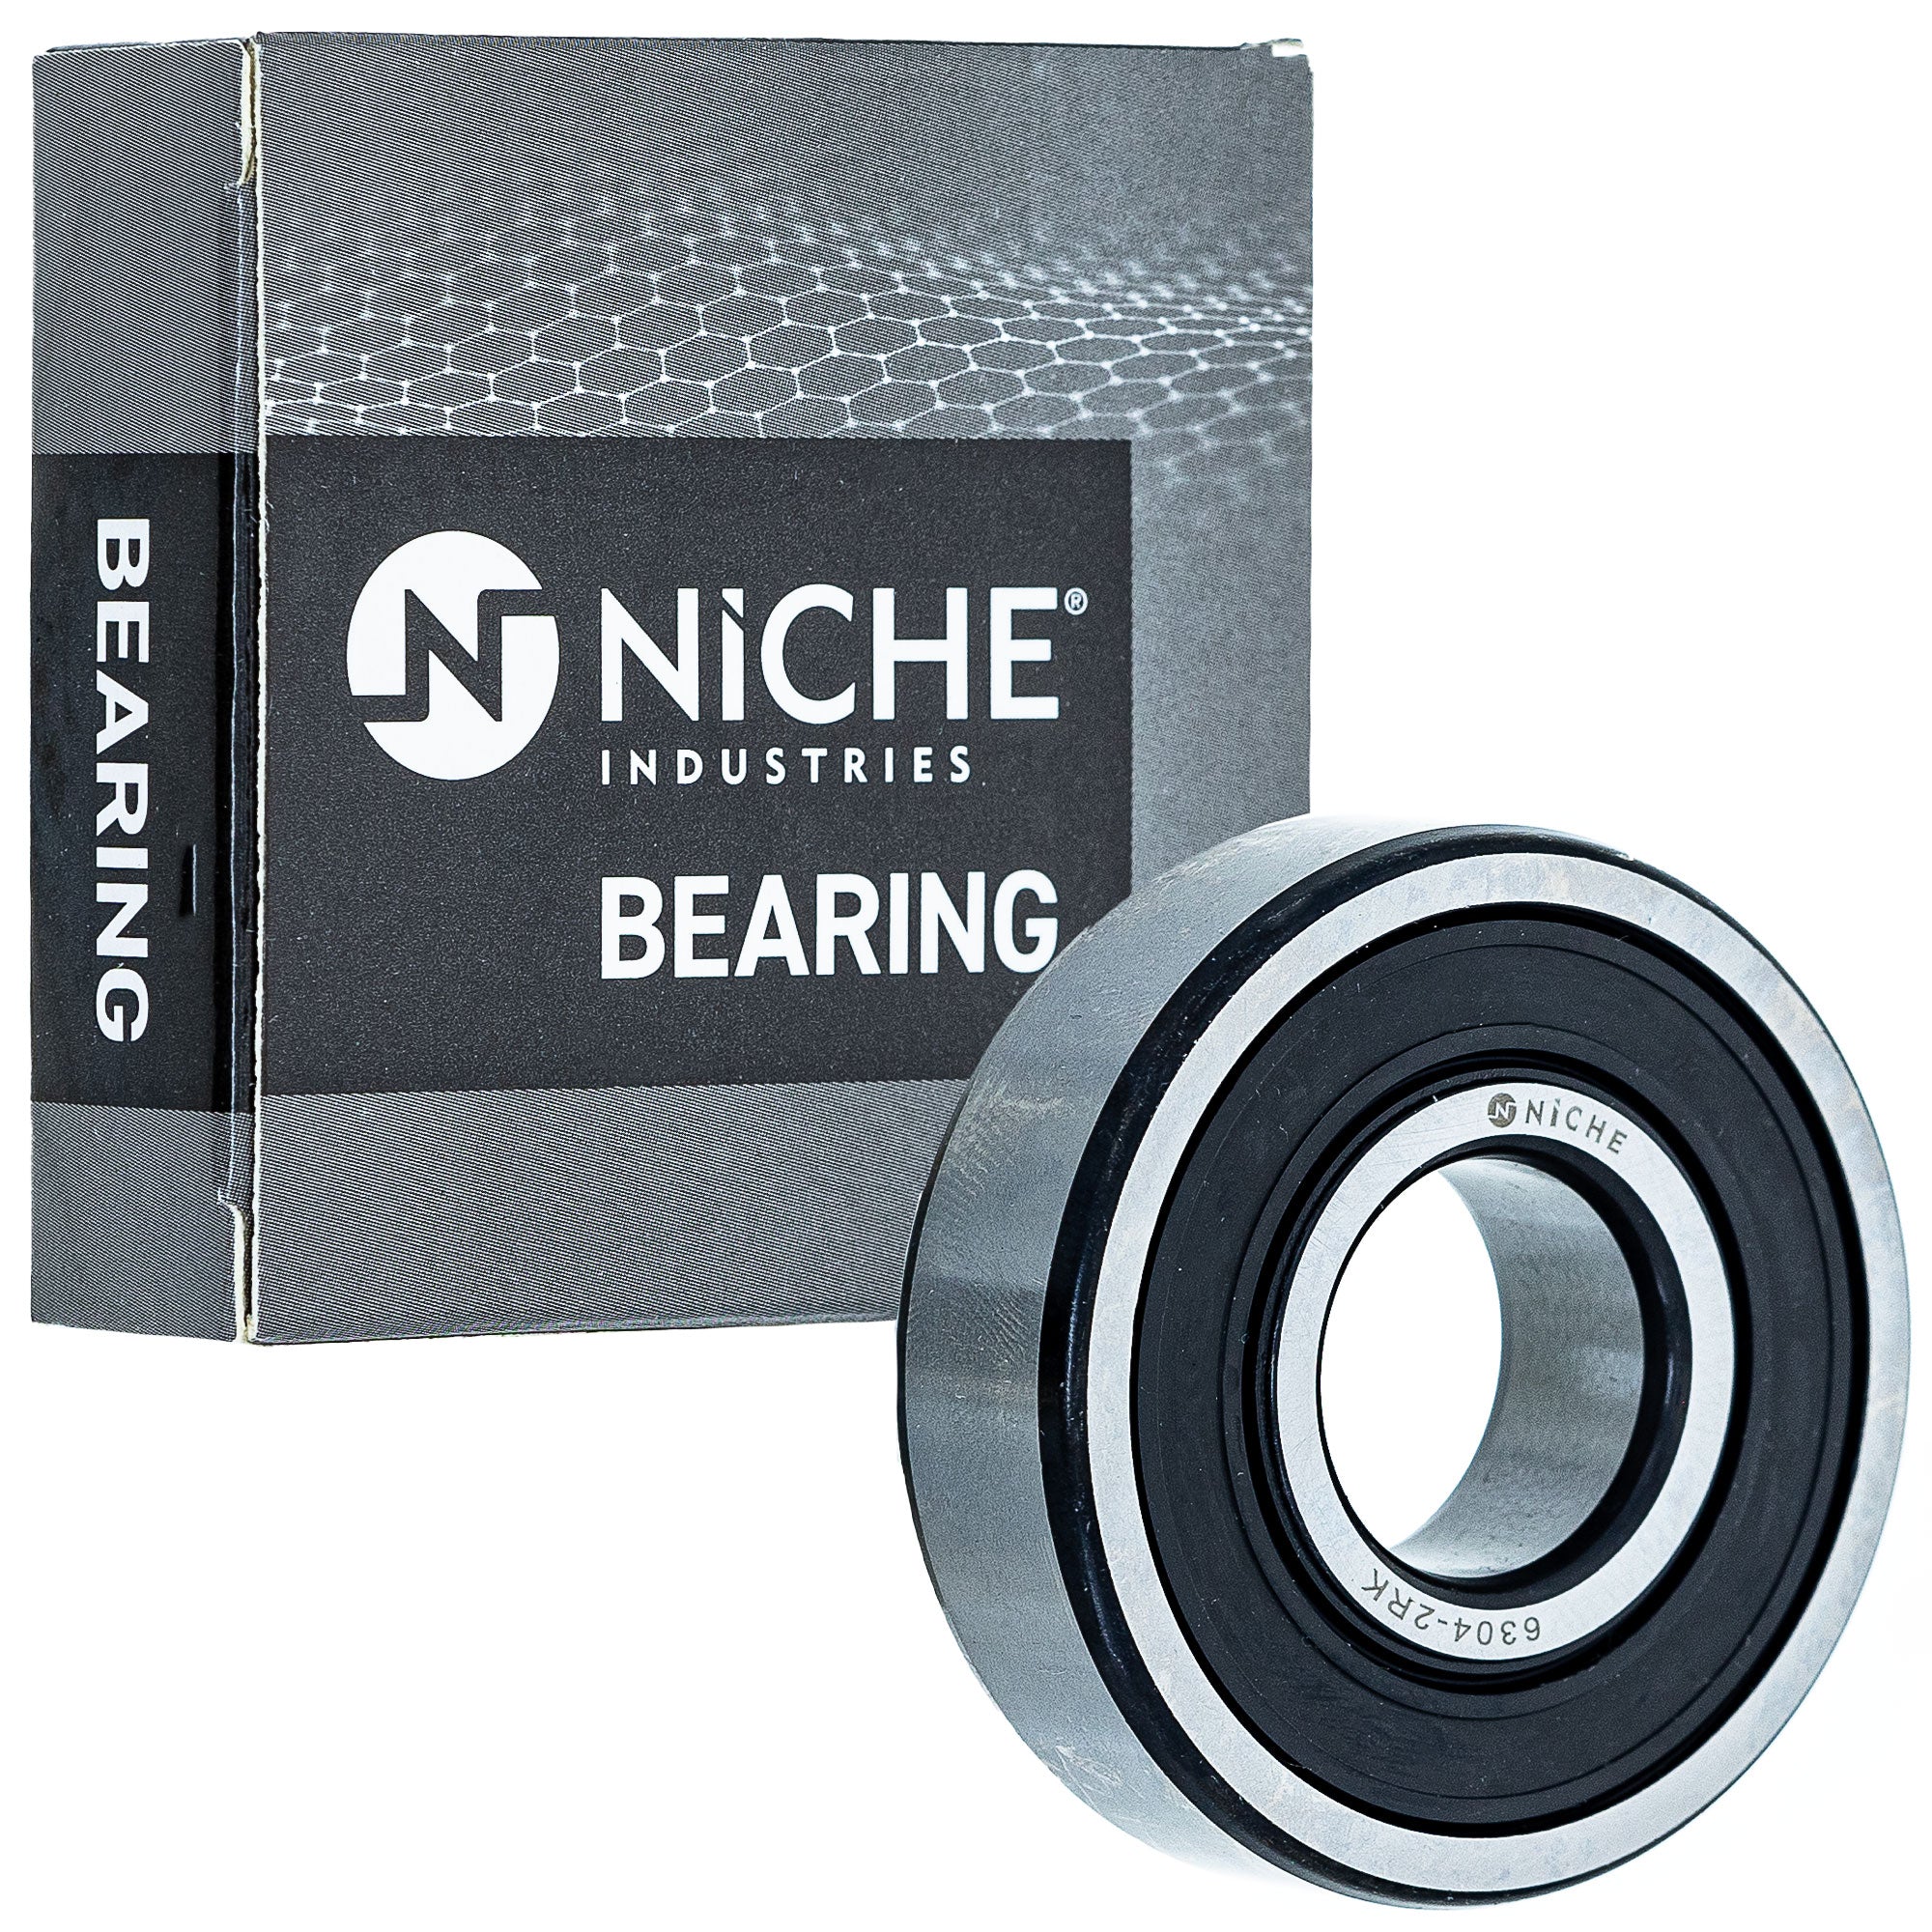 NICHE 519-CBB2343R Bearing for zOTHER XL350 XL250 VTX1800T VTX1800S